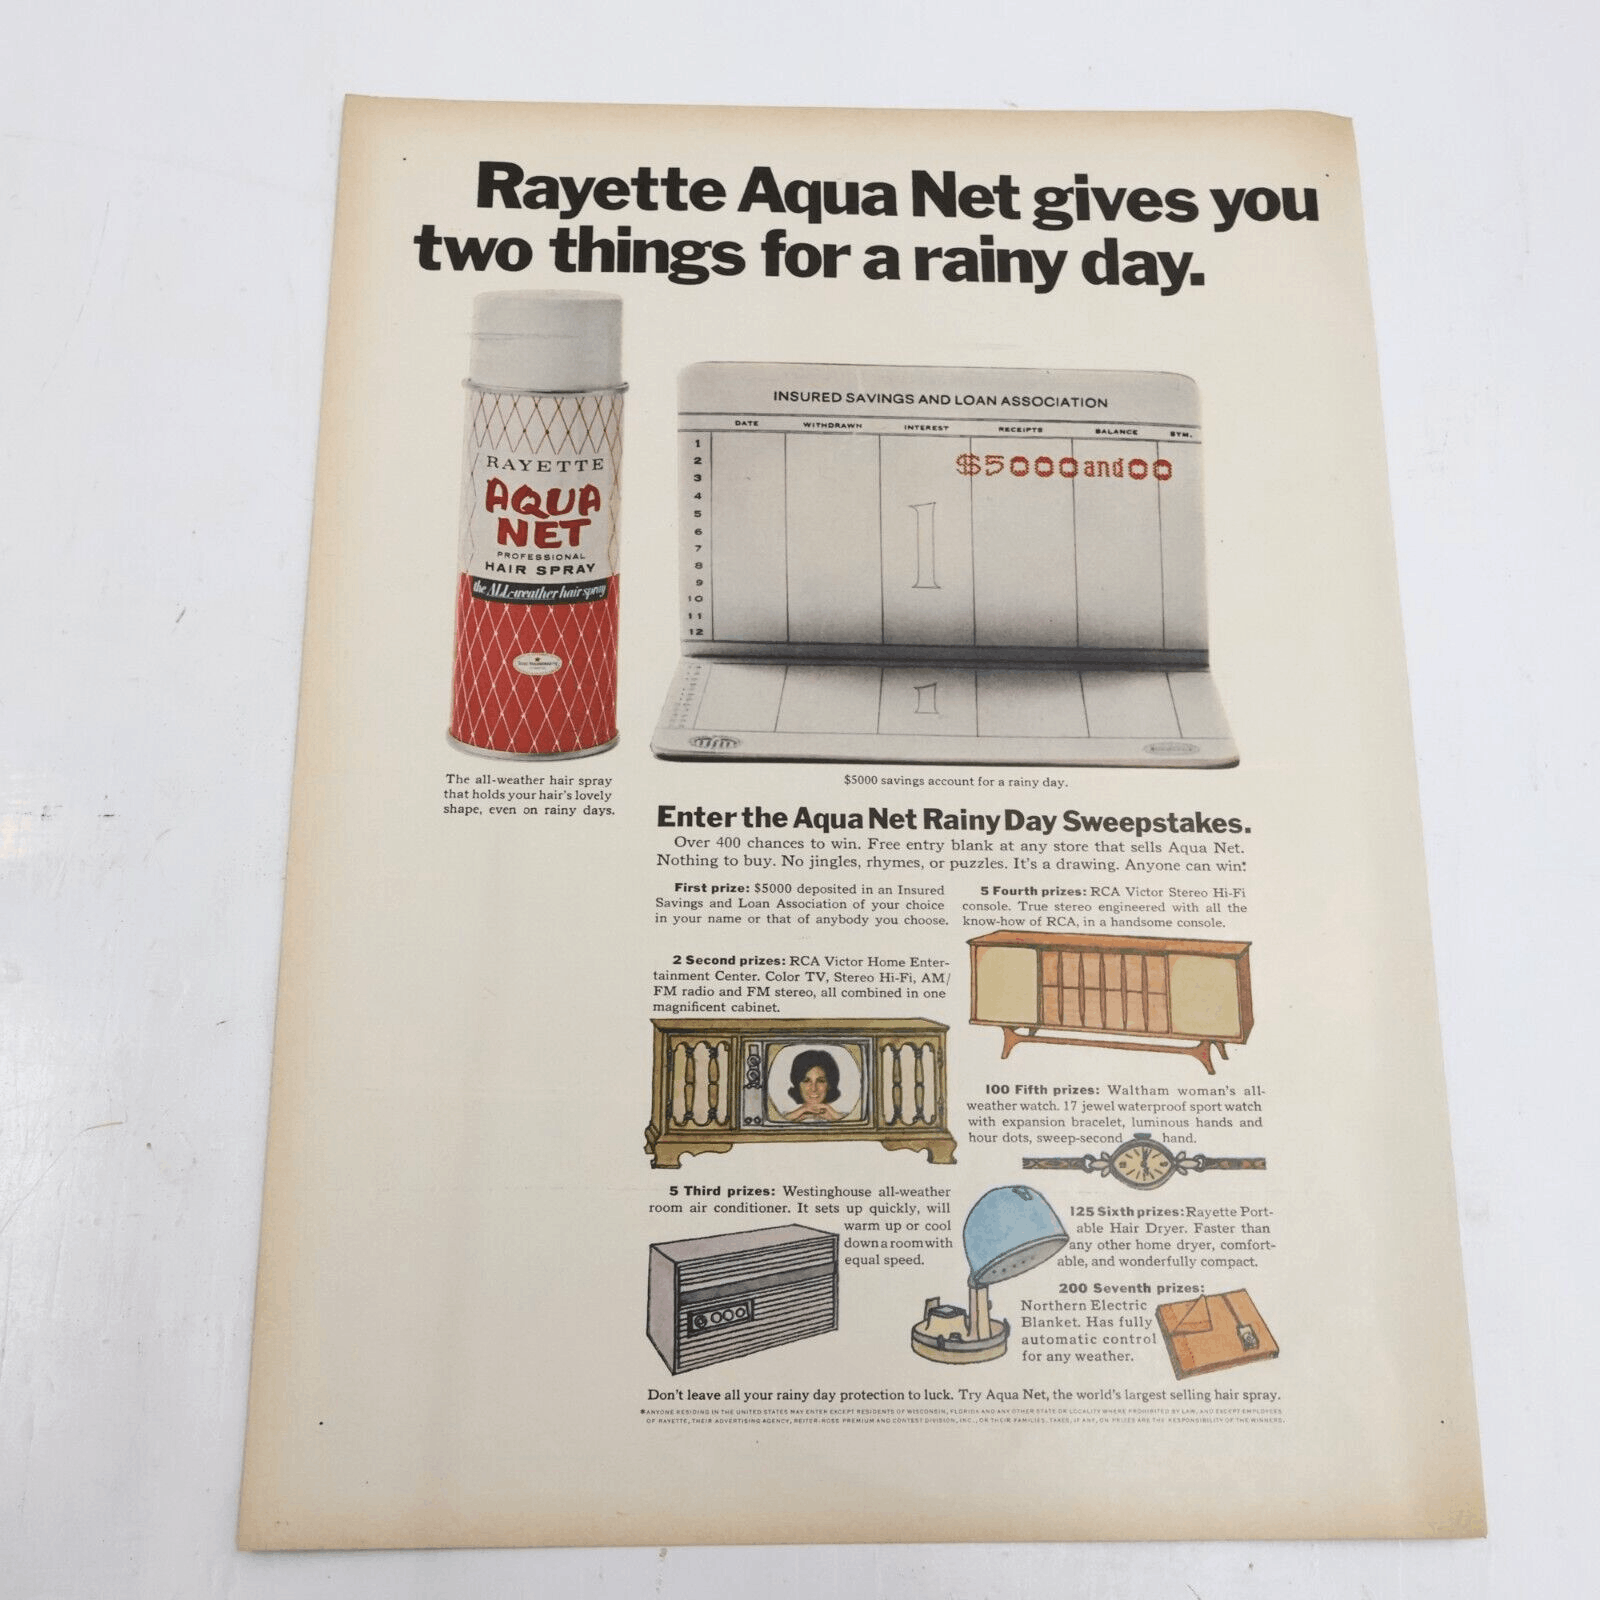 1964 Rayette Aqua Net Professional Hair Spray For a Rainy Day Print Ad 10.5×13.5